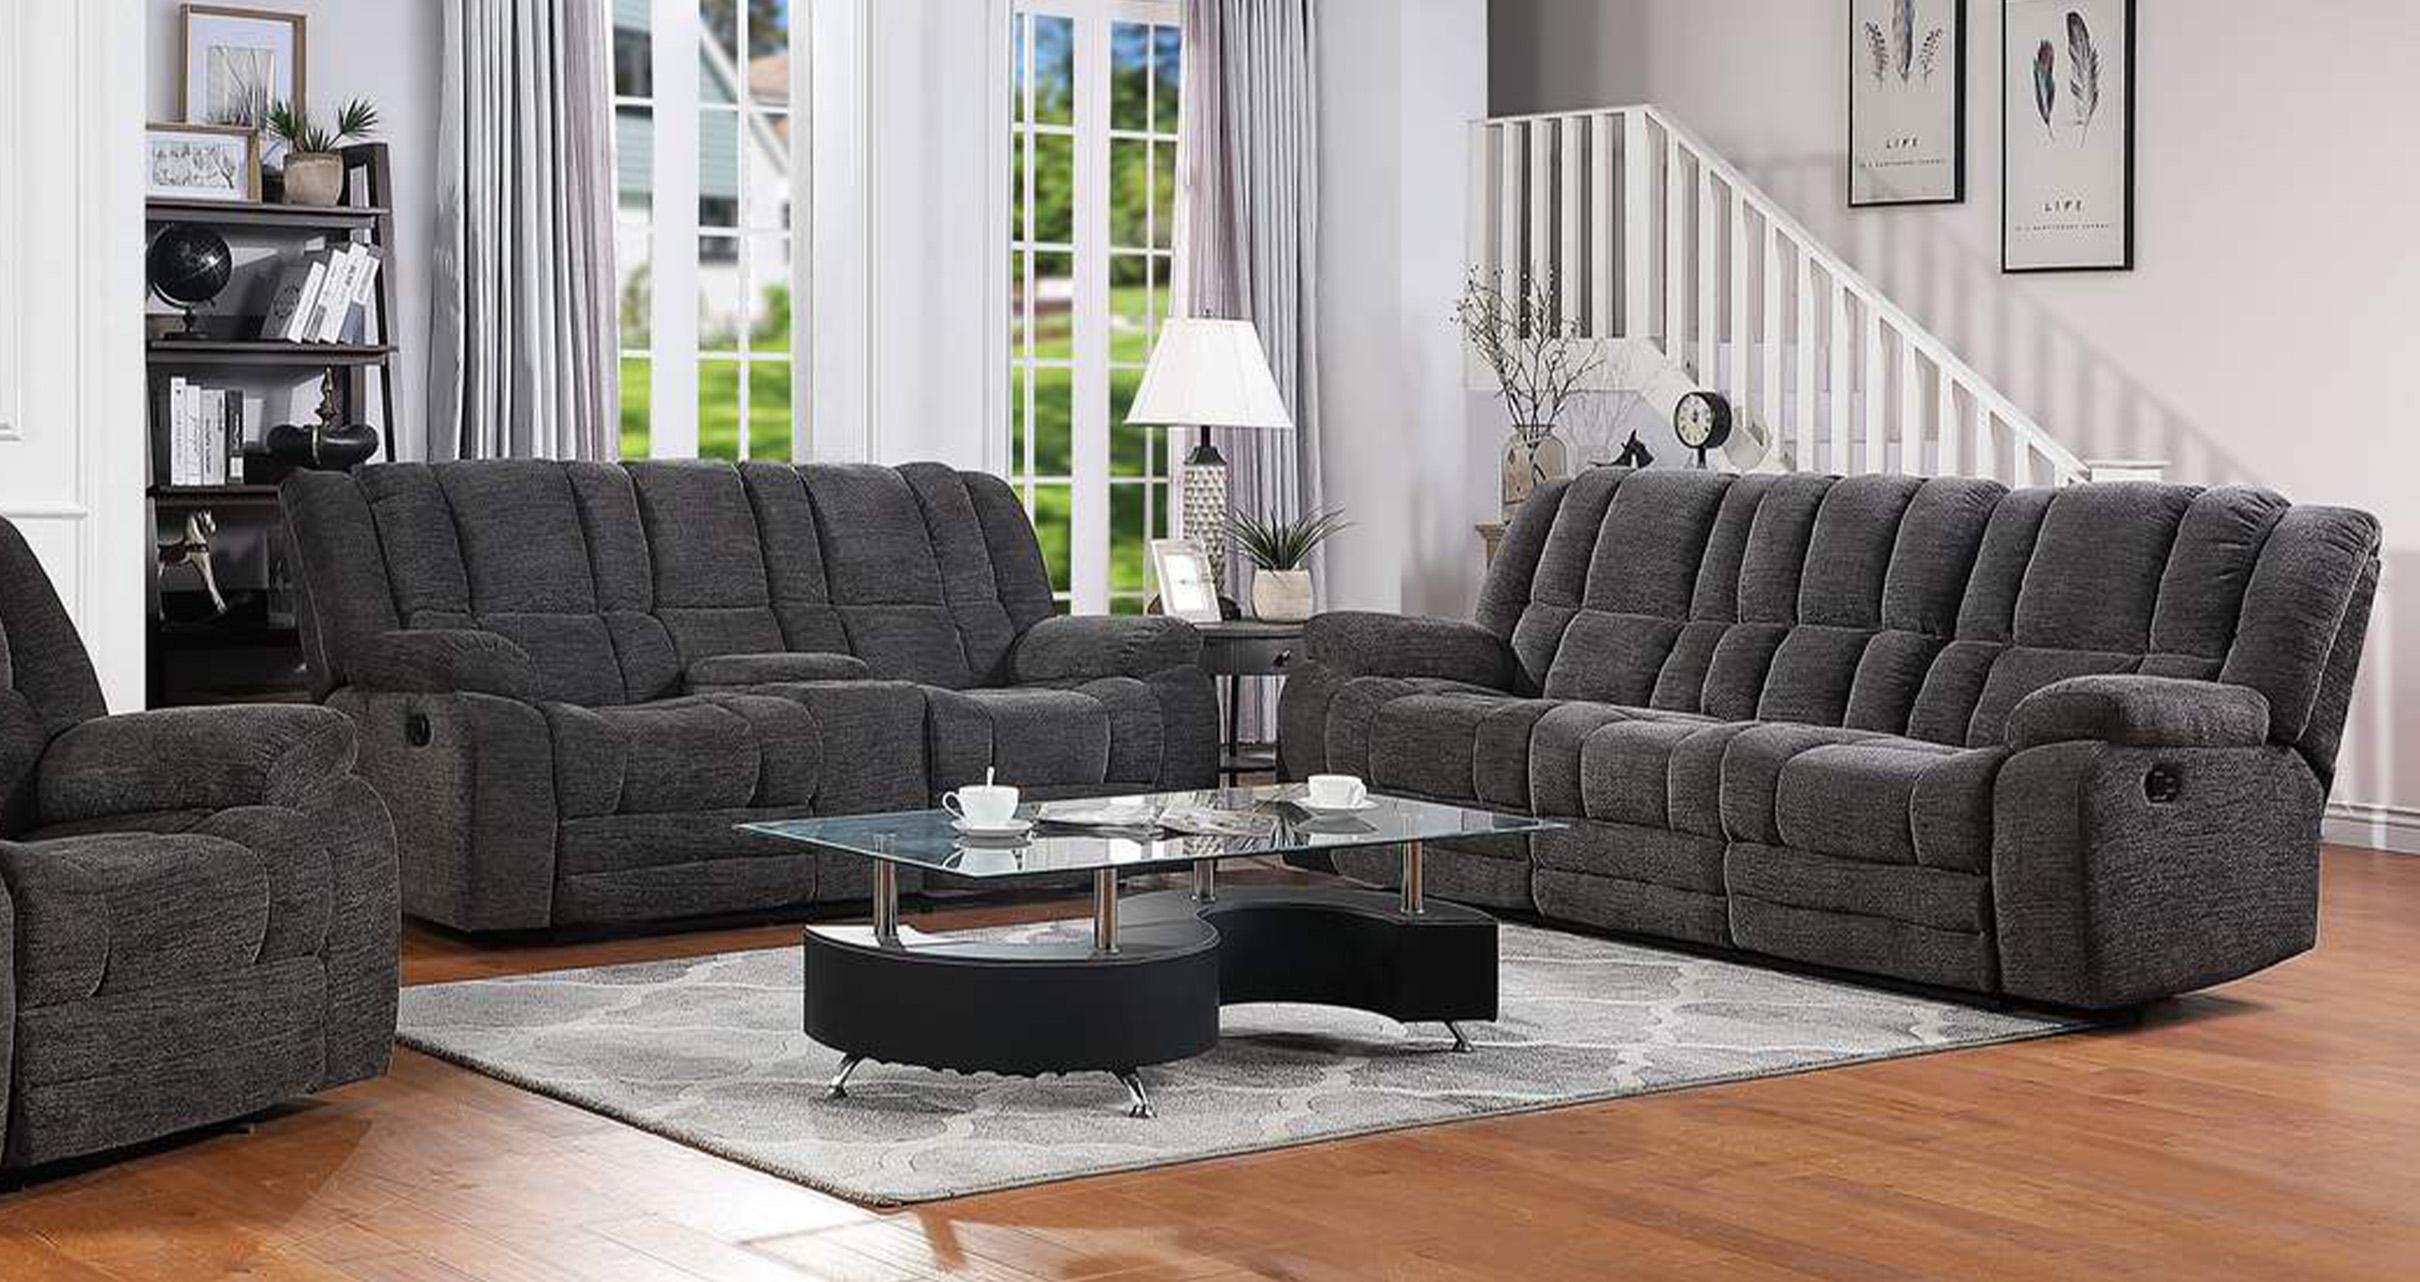 Contemporary, Modern Recliner Sofa Set CHICAGO GHF-808857938657 in Dark Grey Chenille